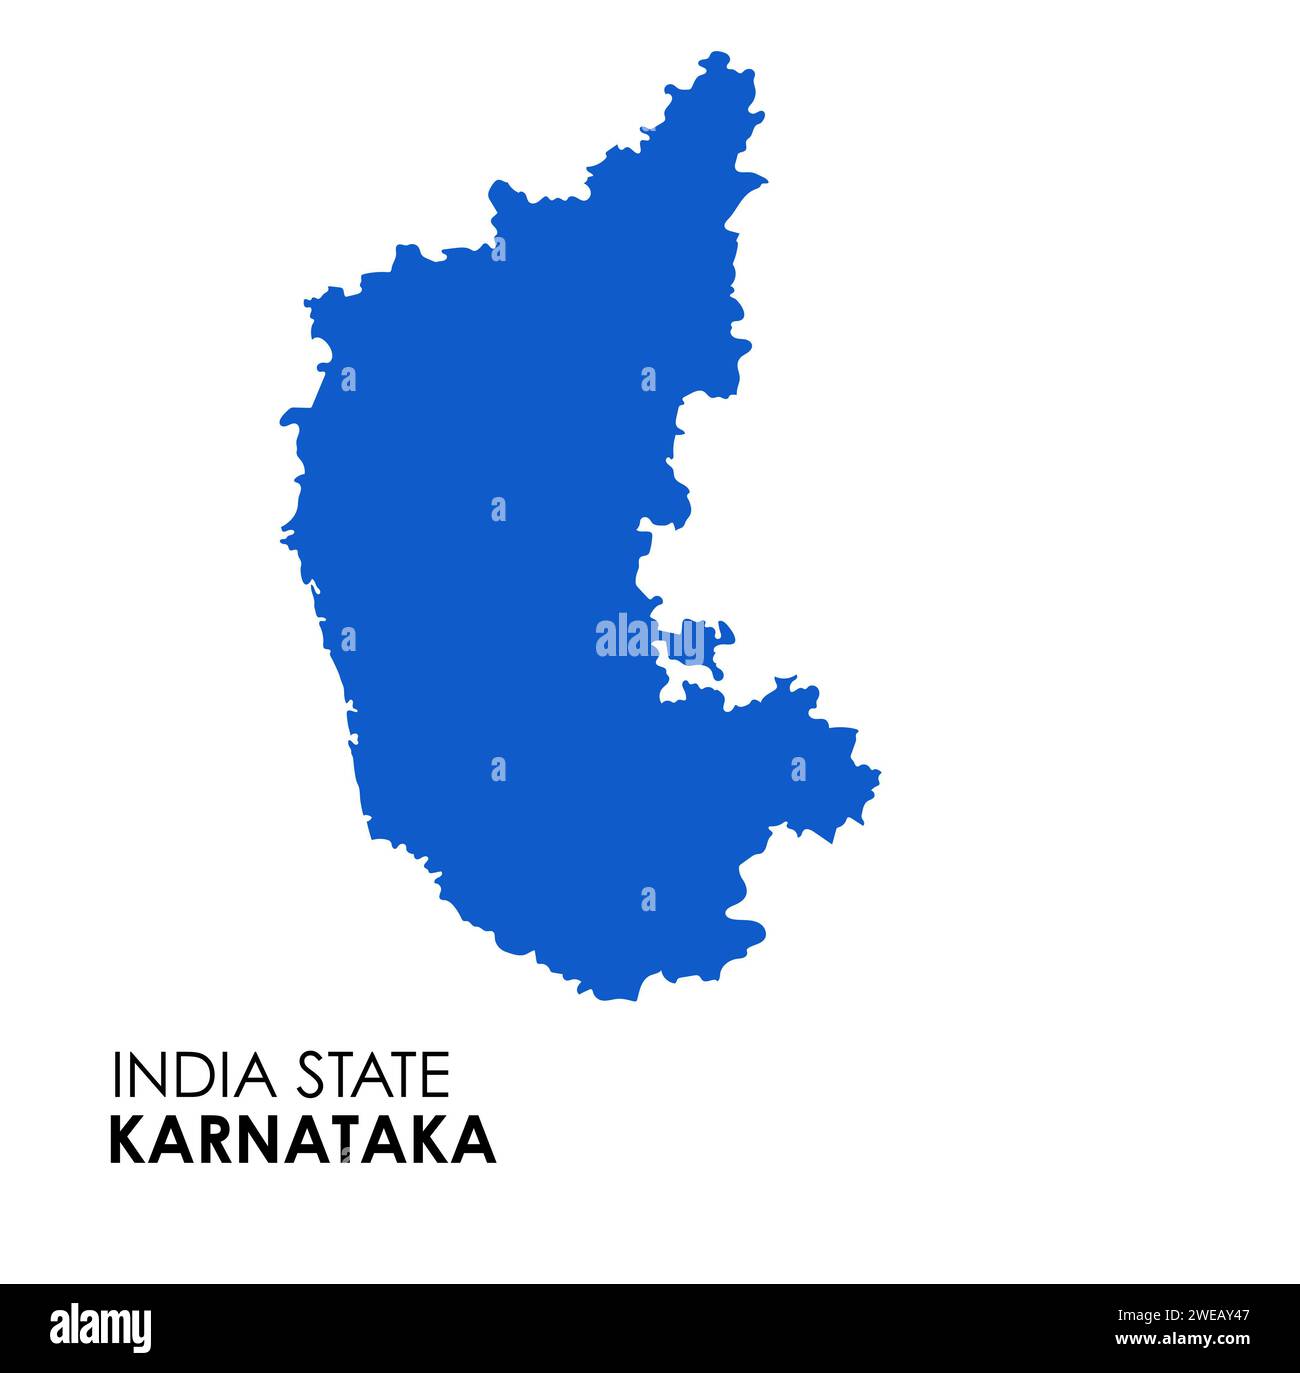 Karnataka map of Indian state. Karnataka map vector illustration. Karnataka map on white background. Stock Photo